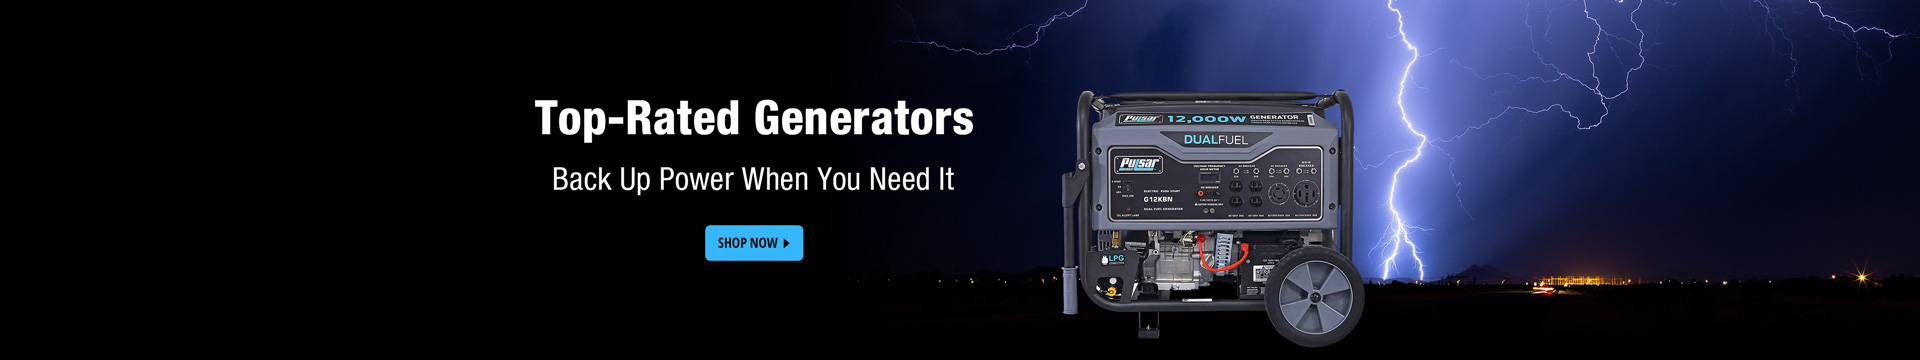 Top-Rated Generators